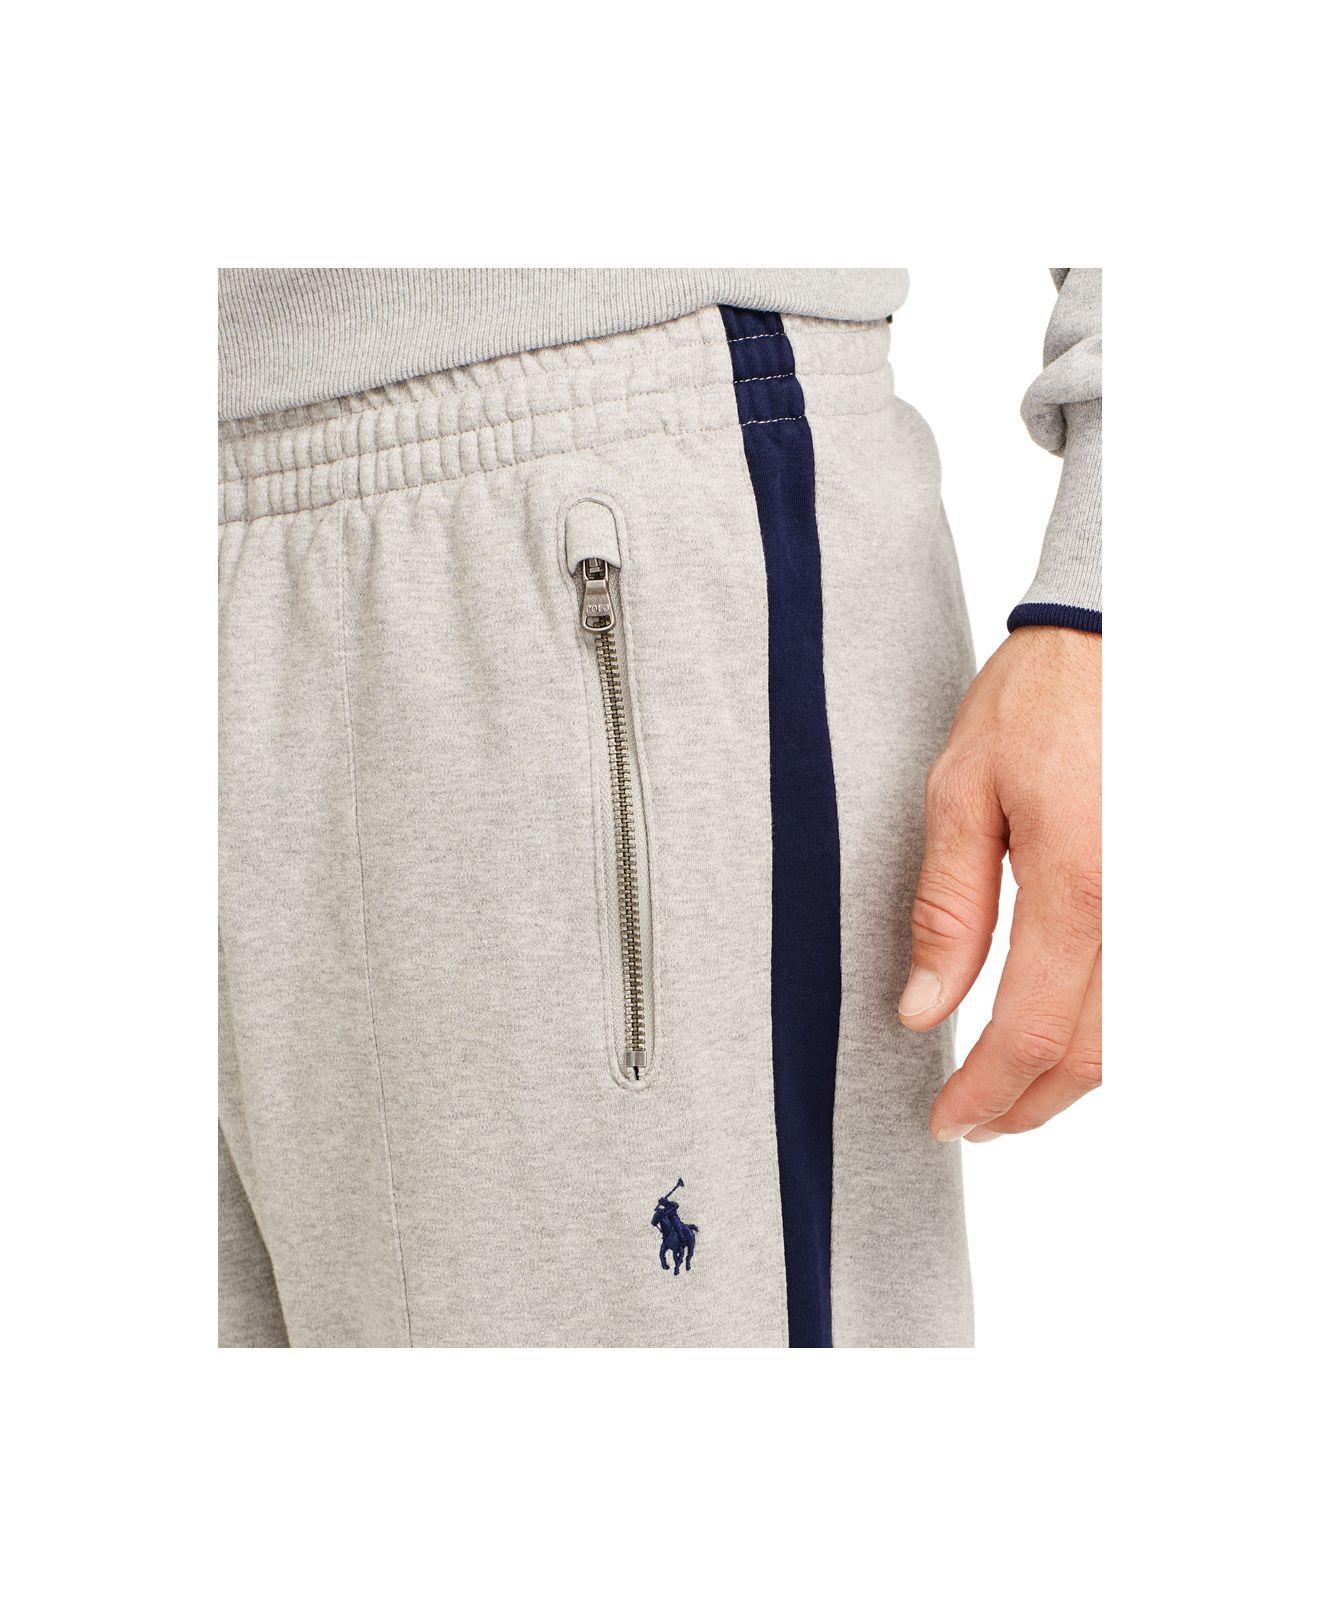 Polo Ralph Lauren Interlock Track Pants in Gray for Men - Lyst